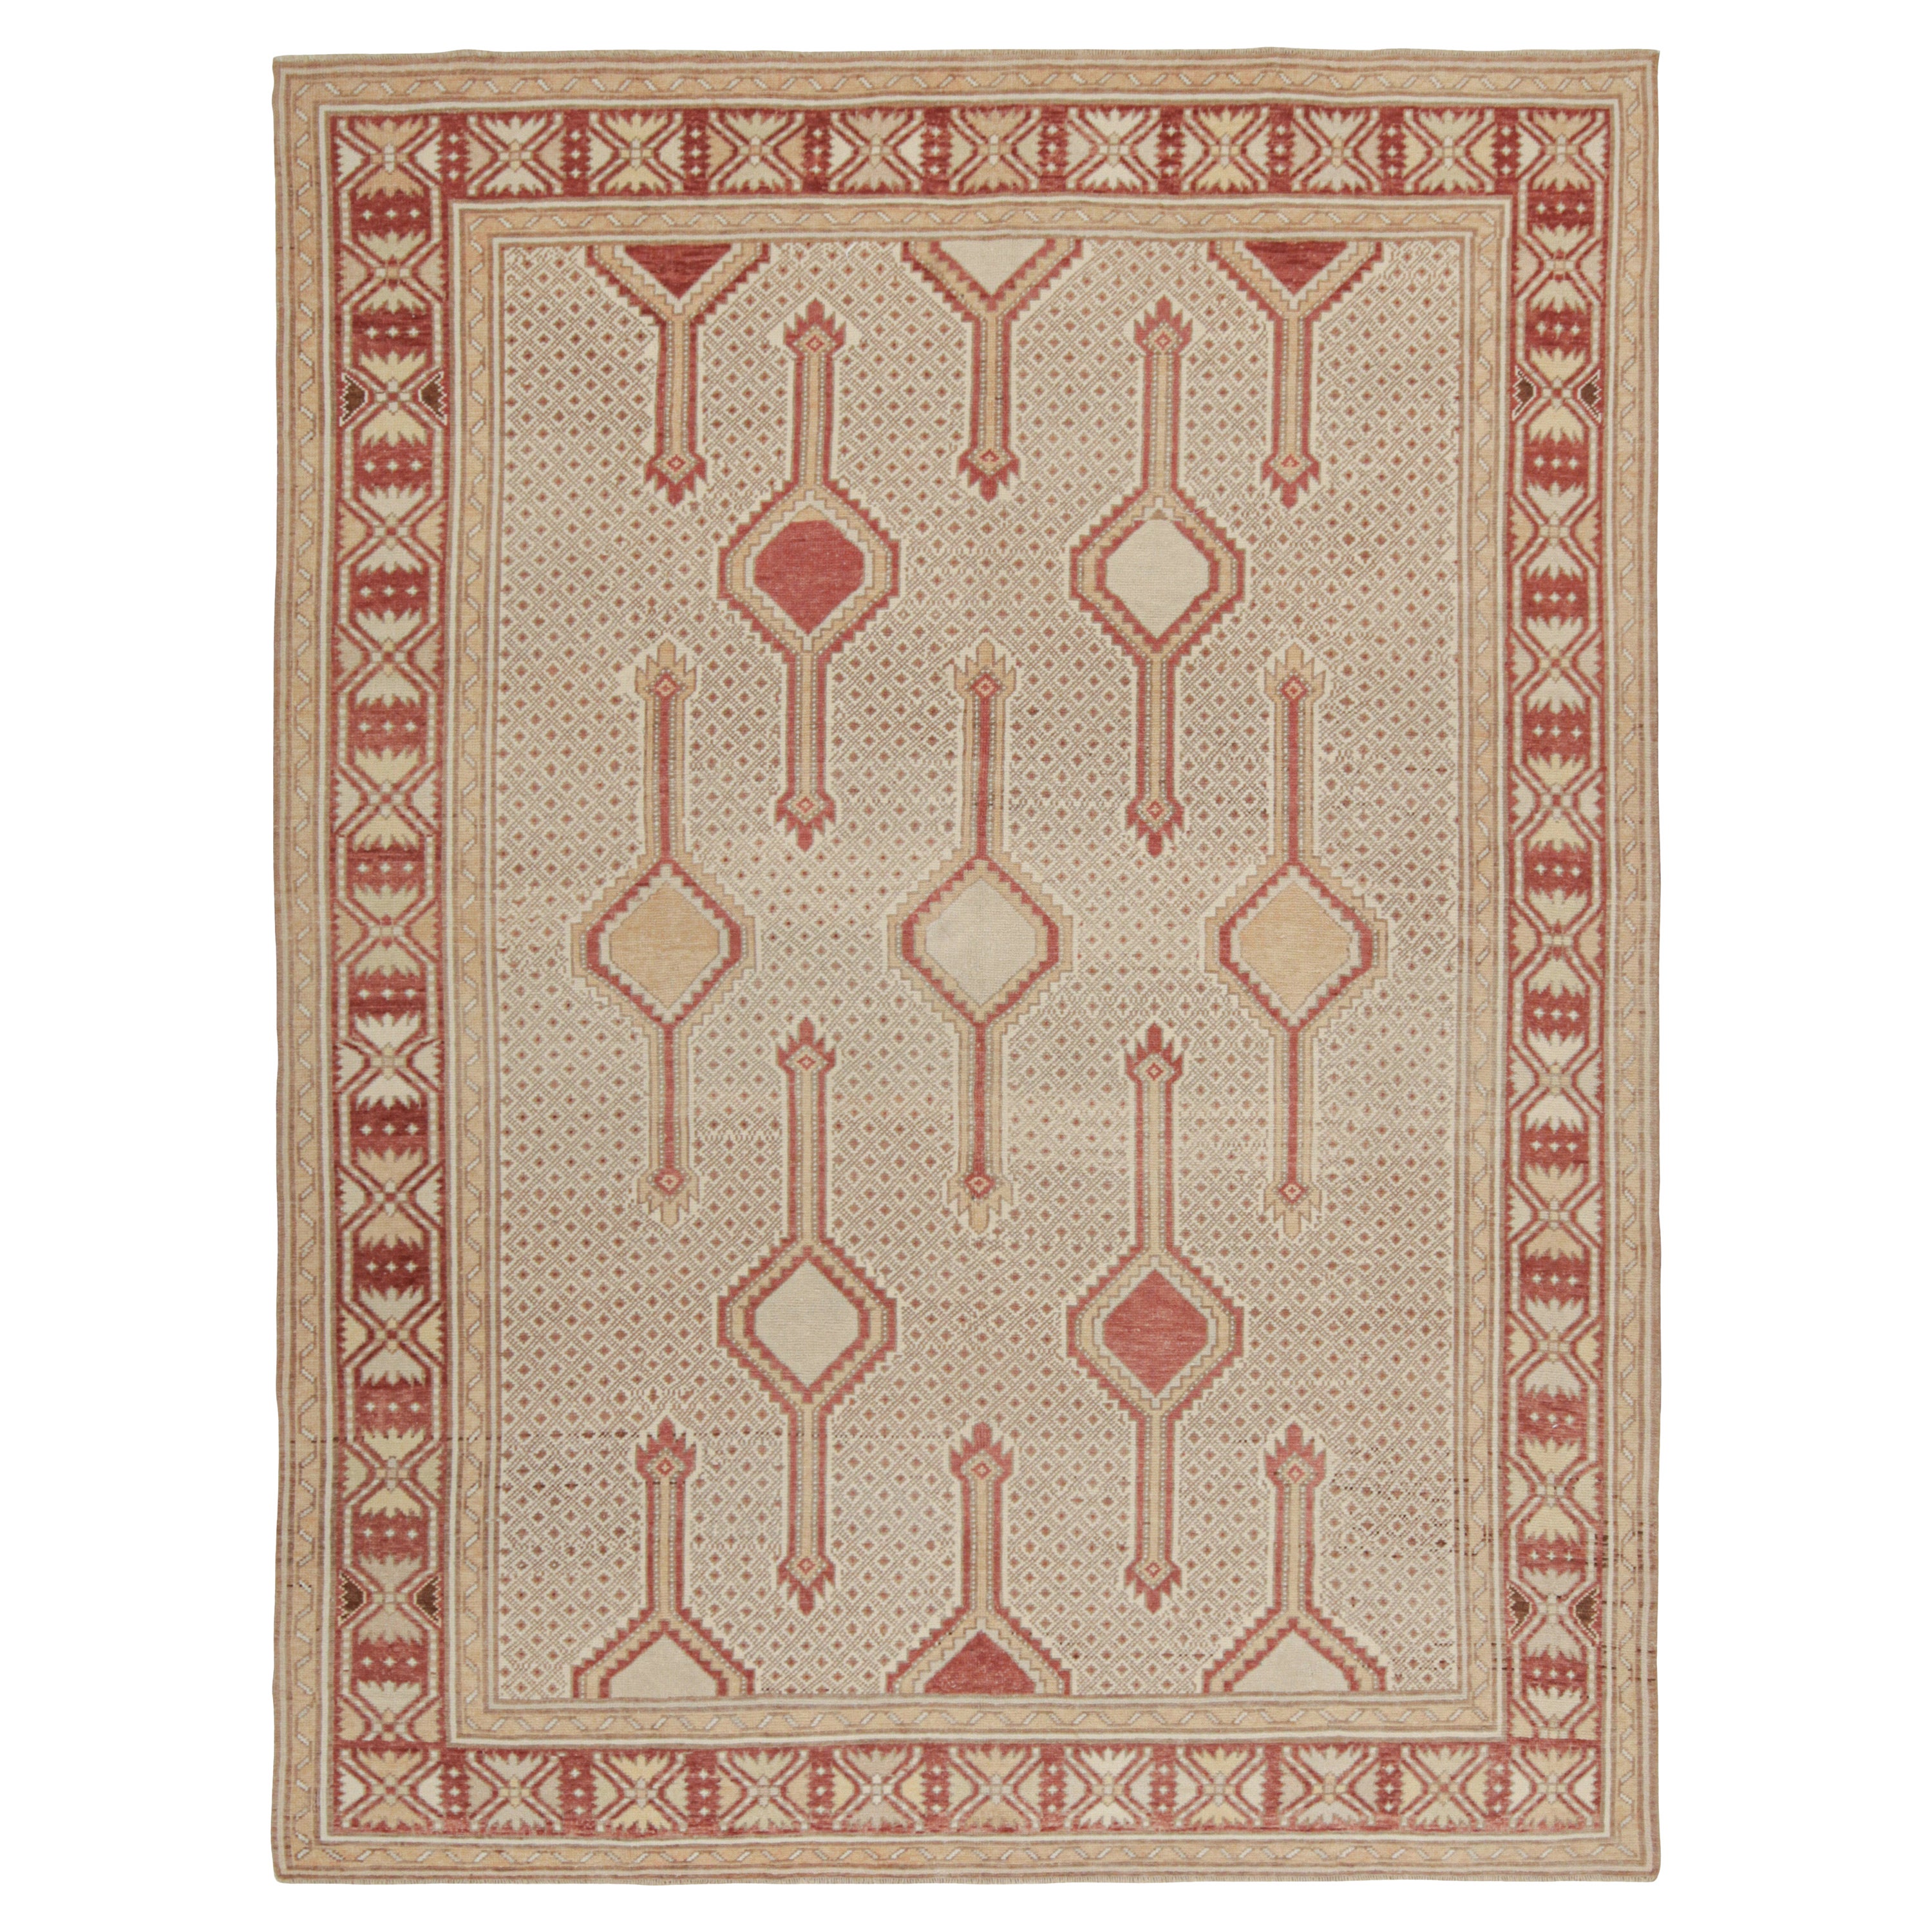 Vintage Persian Rug in Beige-Brown and Red Geometric Patterns